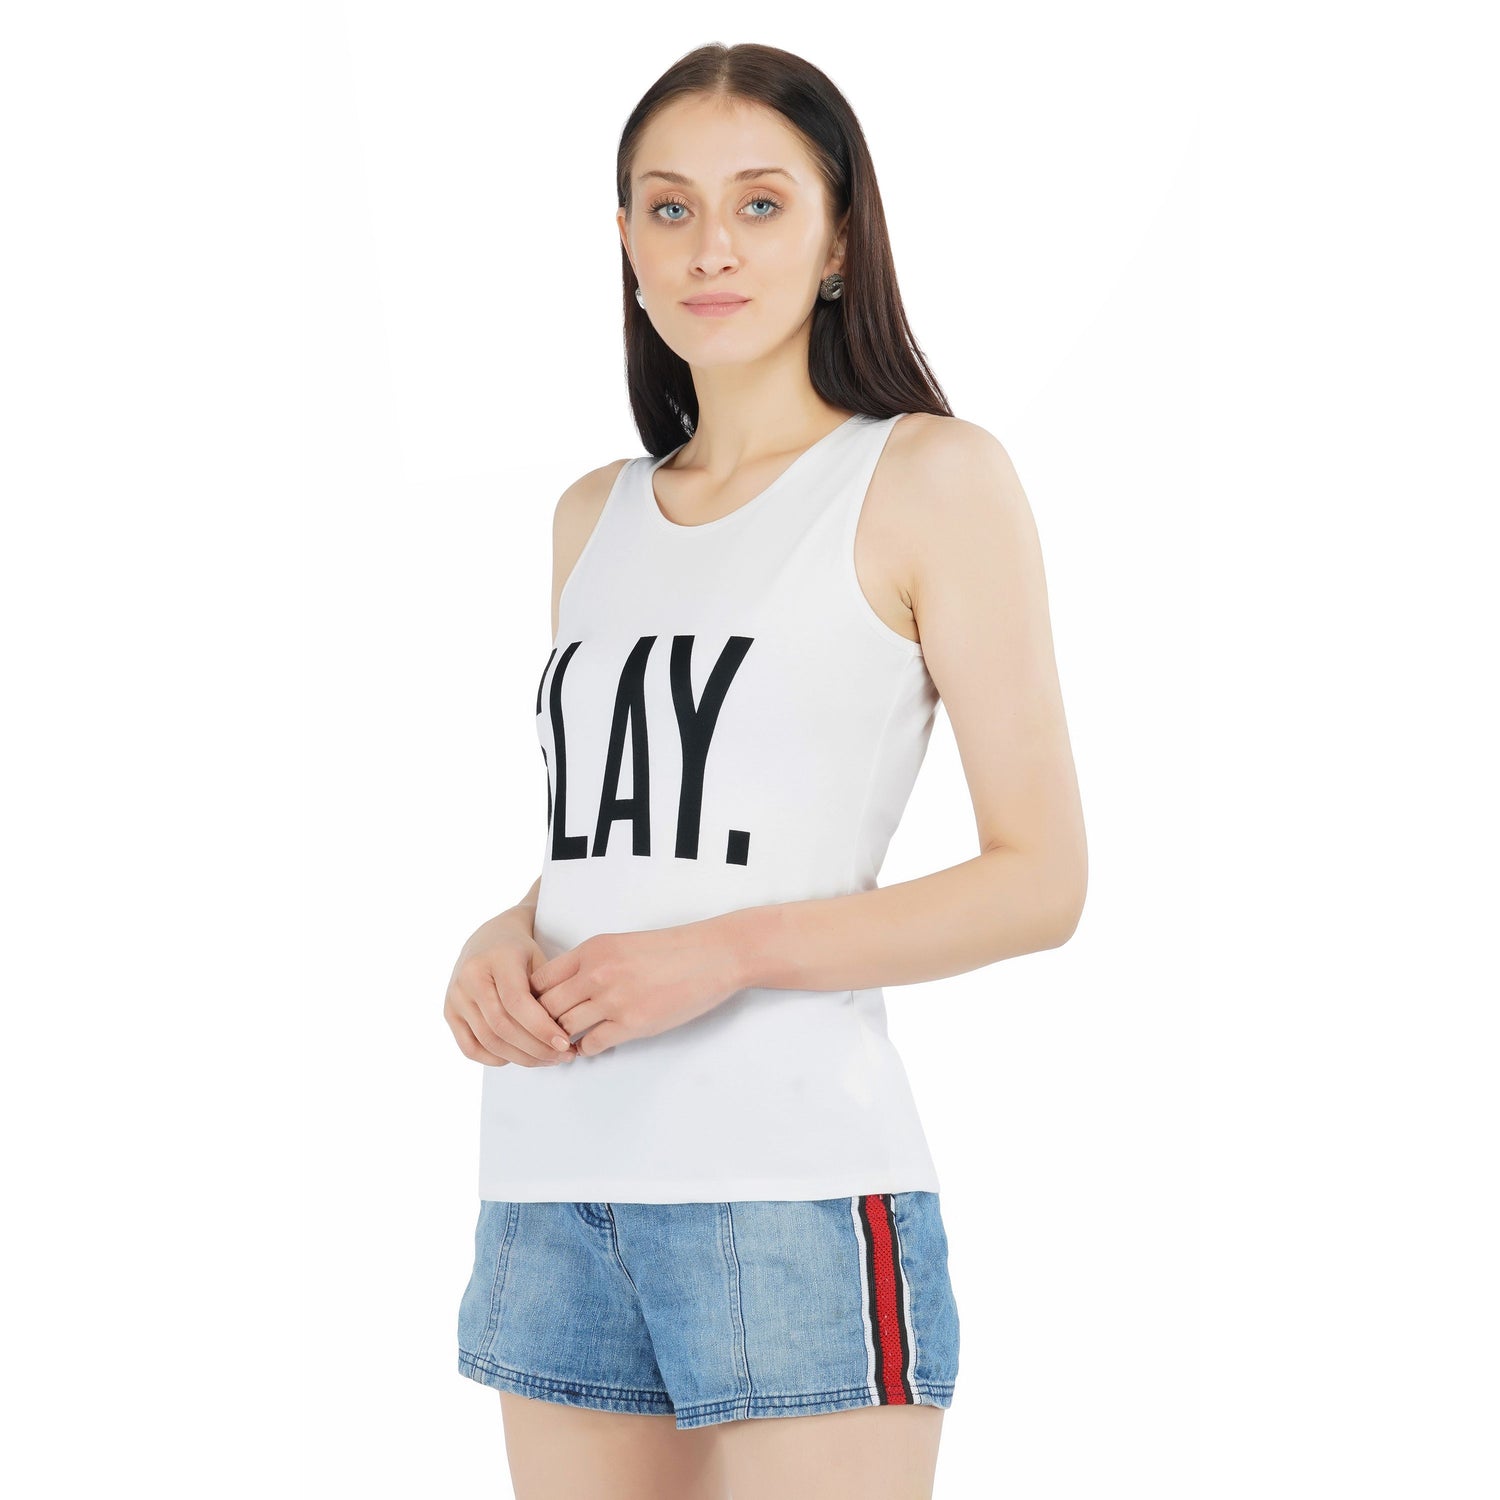 SLAY. Classic Women's Printed White Tank Top-clothing-to-slay.myshopify.com-Top